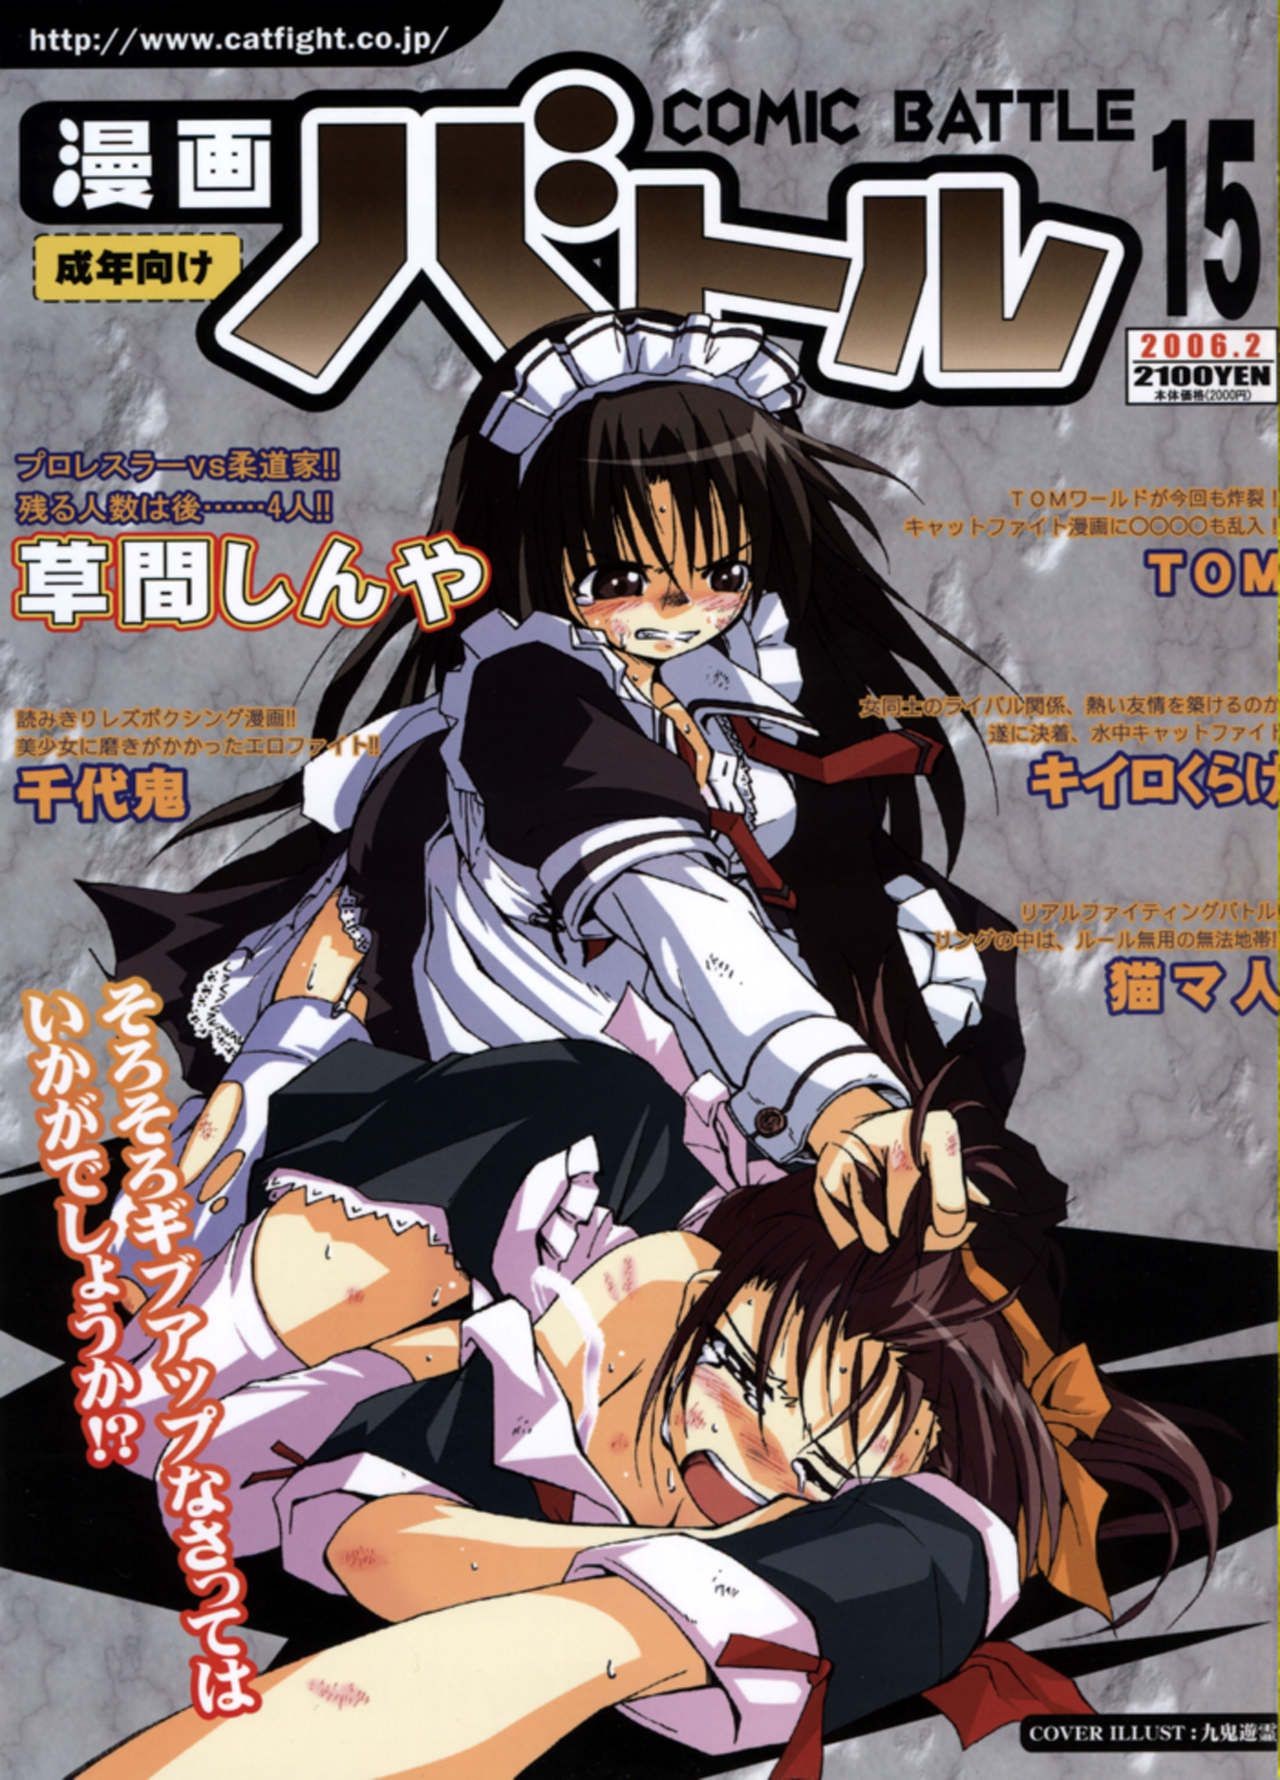 Sex Party Manga Battle Volume 15 Tied